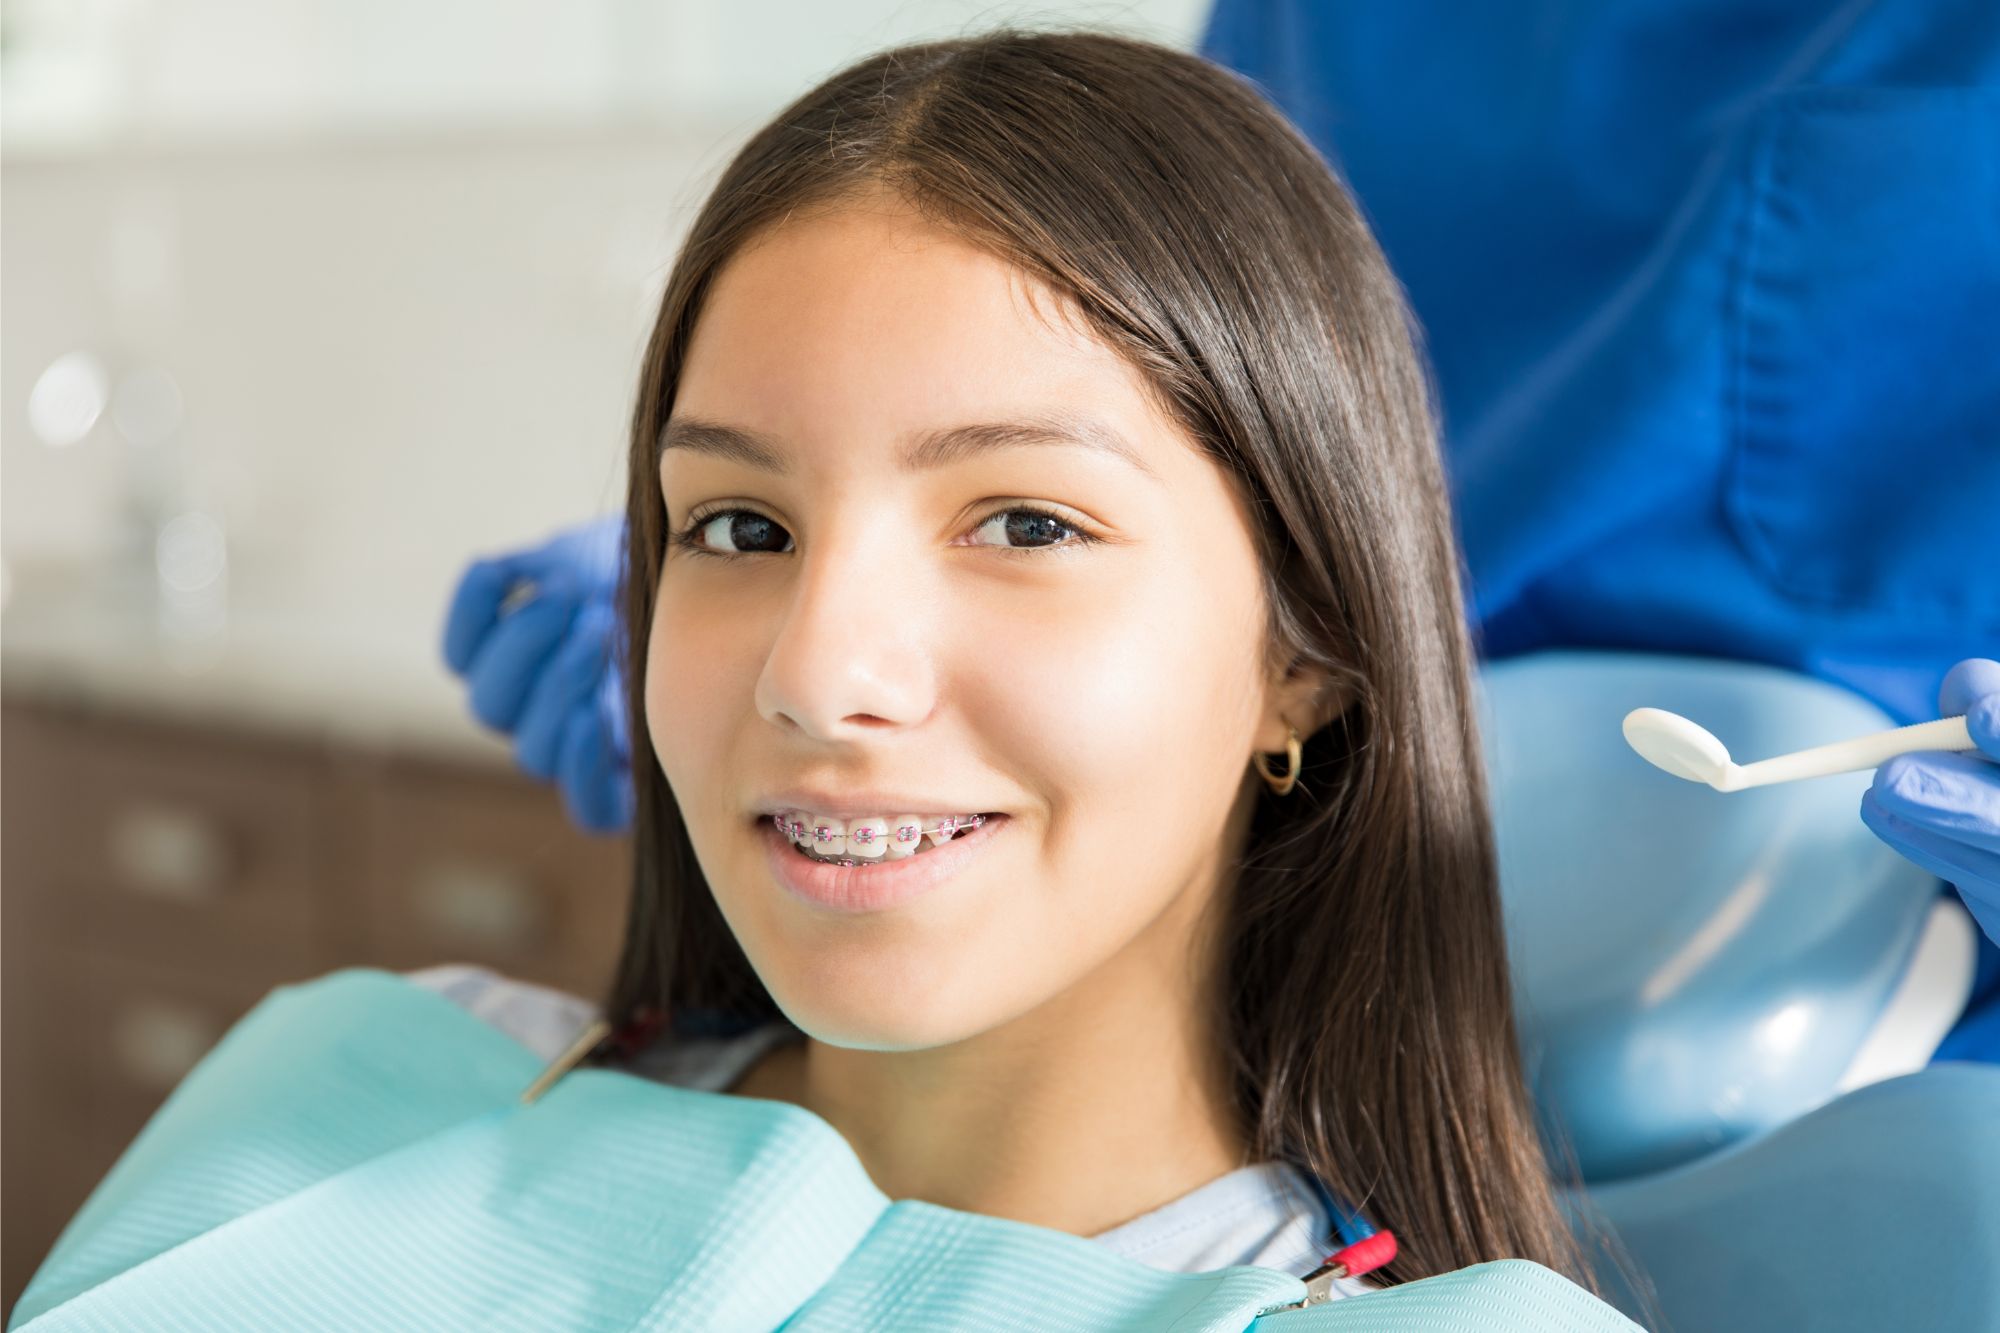 Children Orthodontics